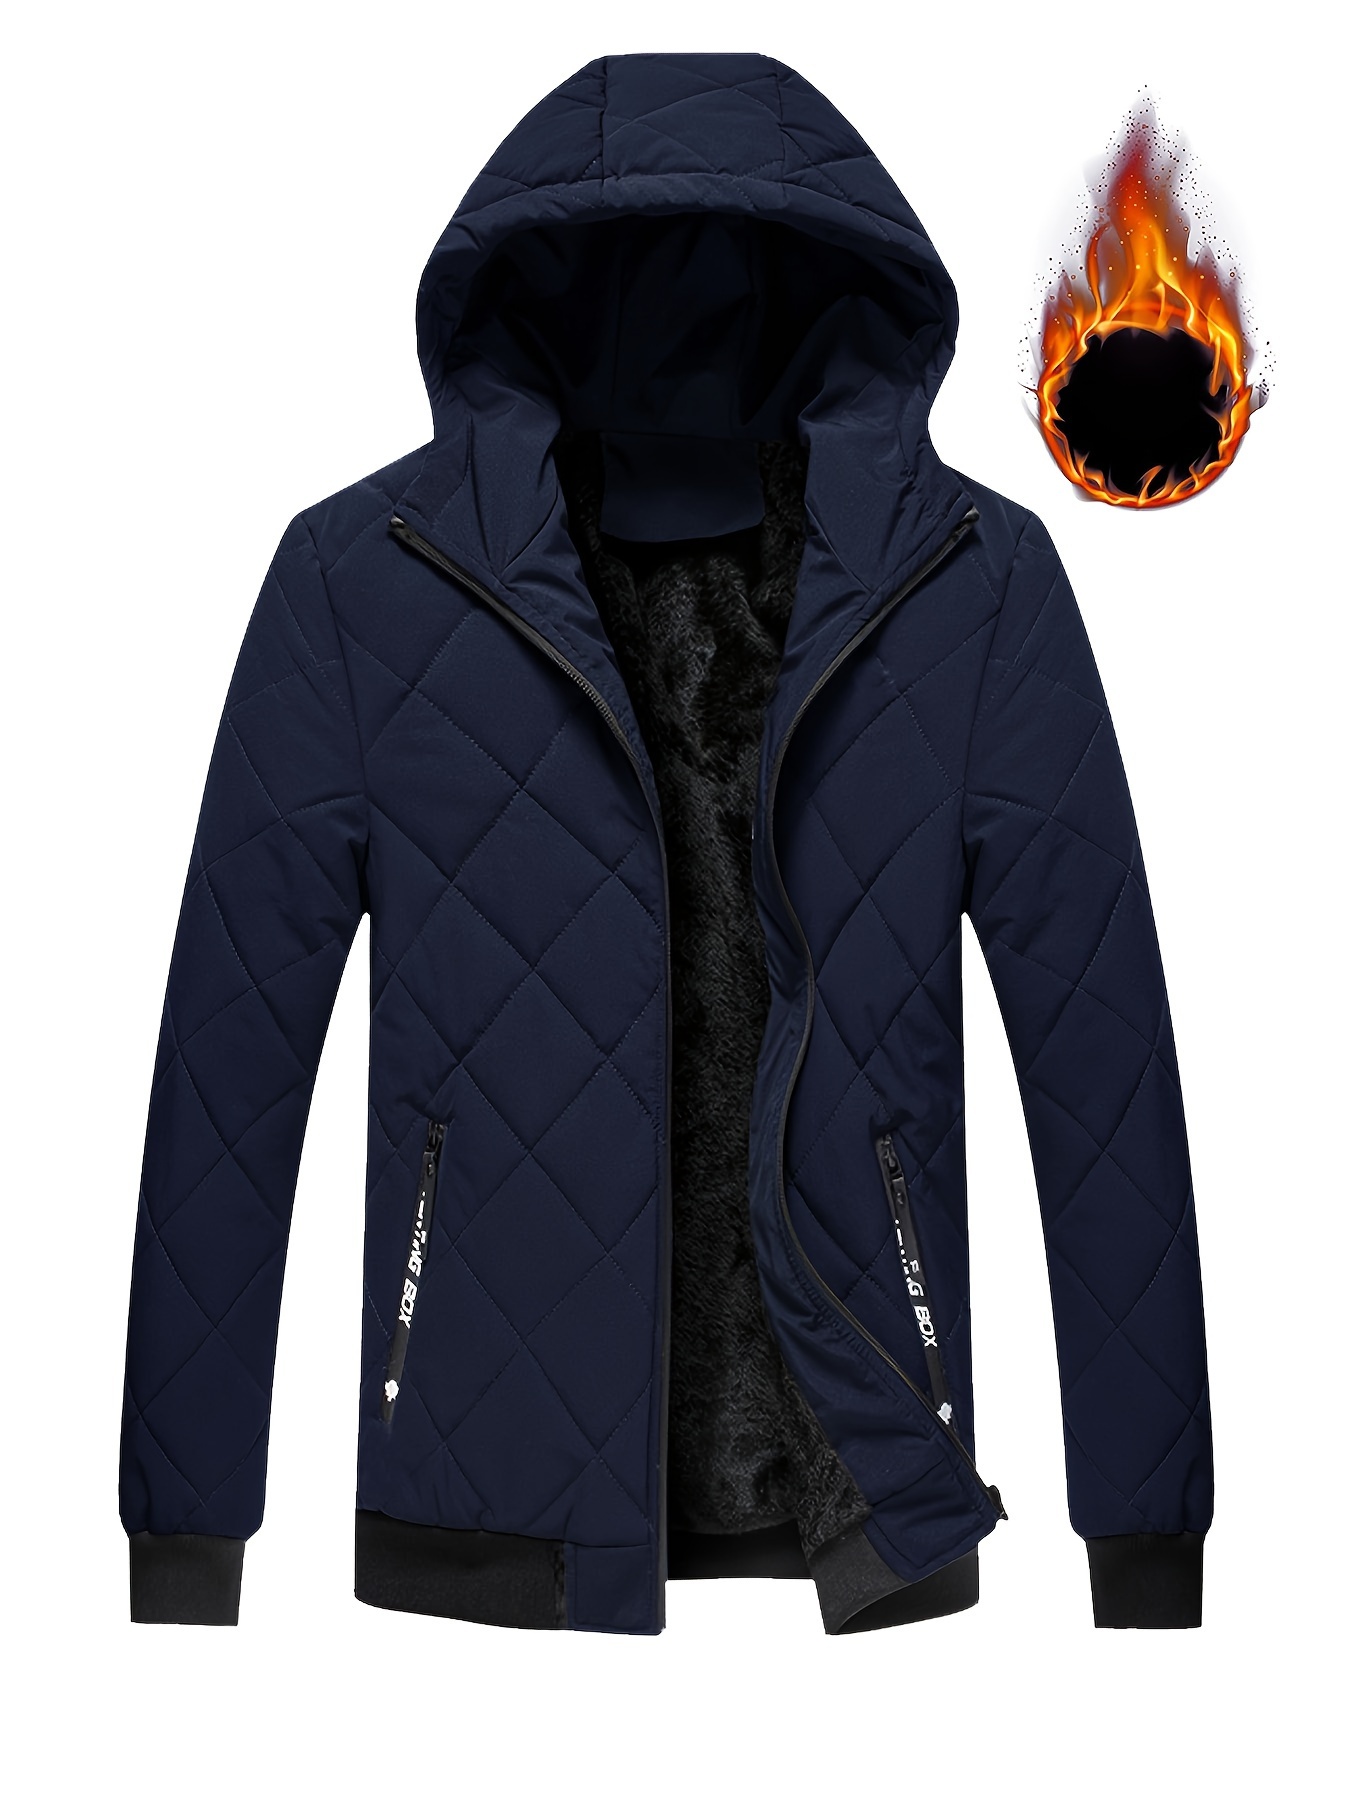 warm fleece mens hooded windbreaker full zip up long sleeve jacket with zipper pockets for winter outdoor leisure